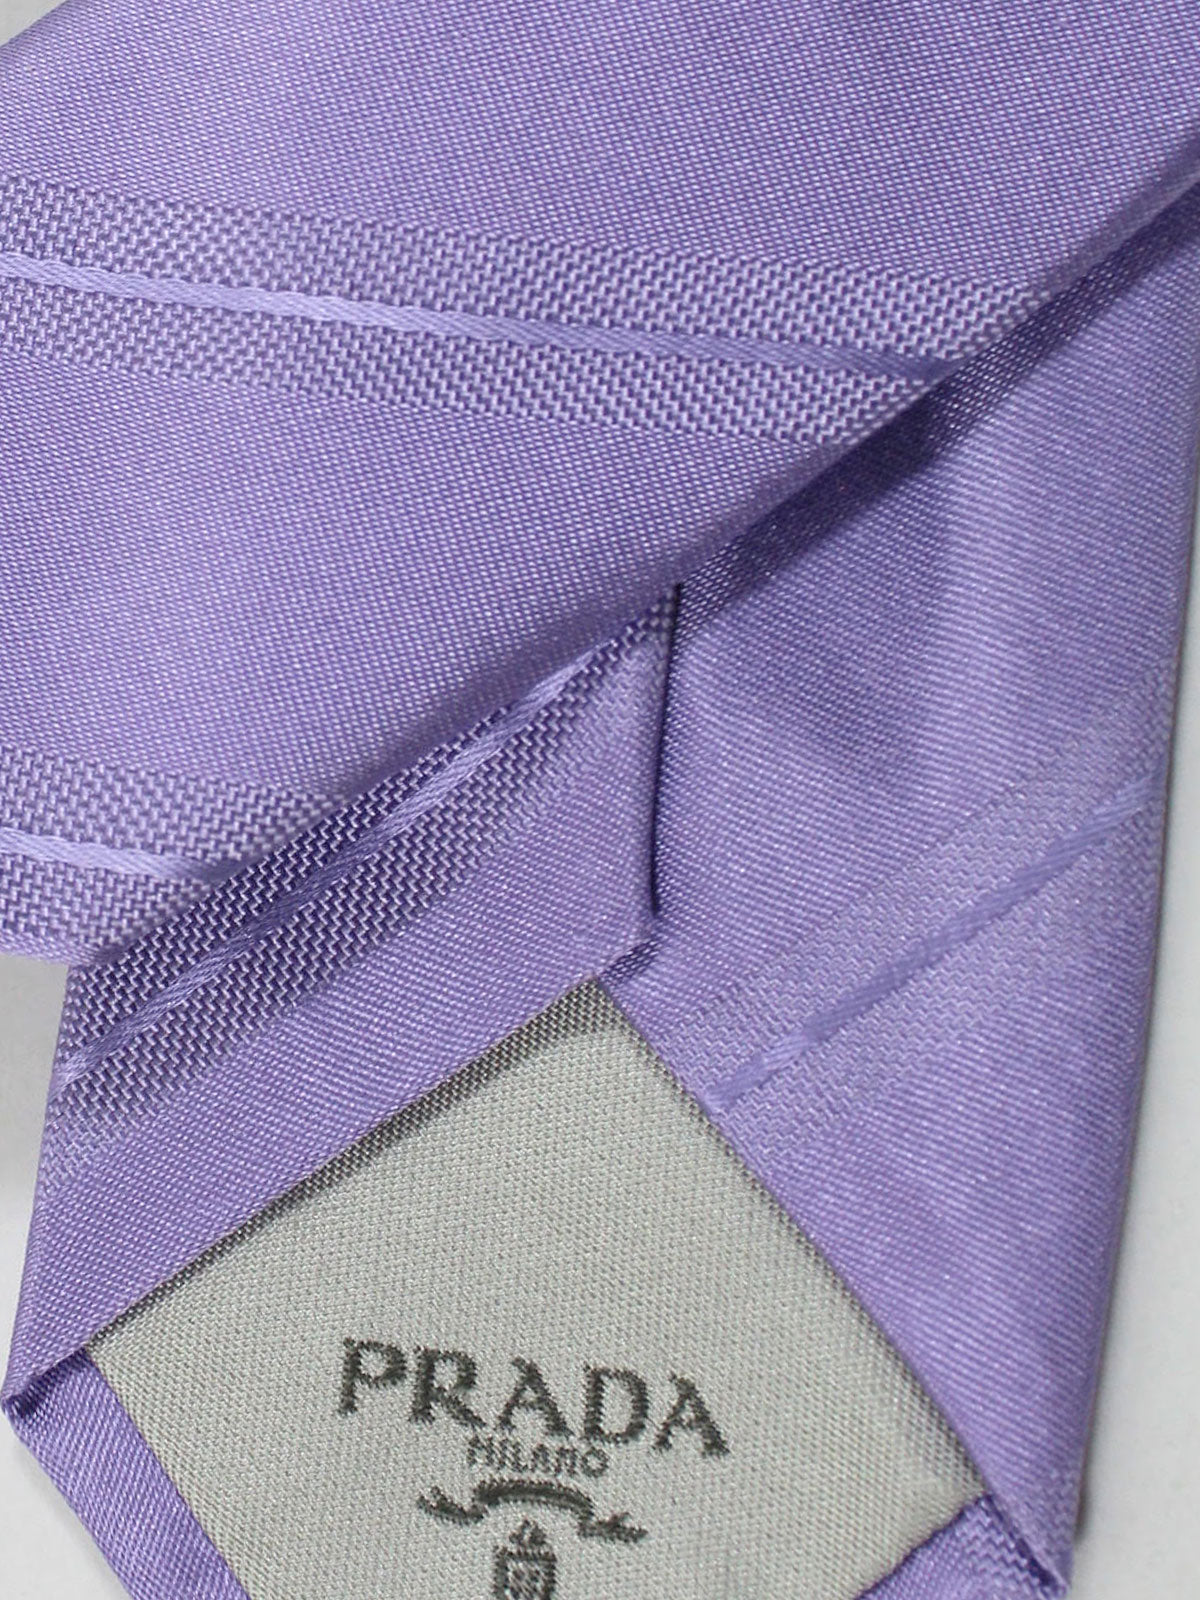 Prada Tie Lilac Stripes Design - Skinny Necktie